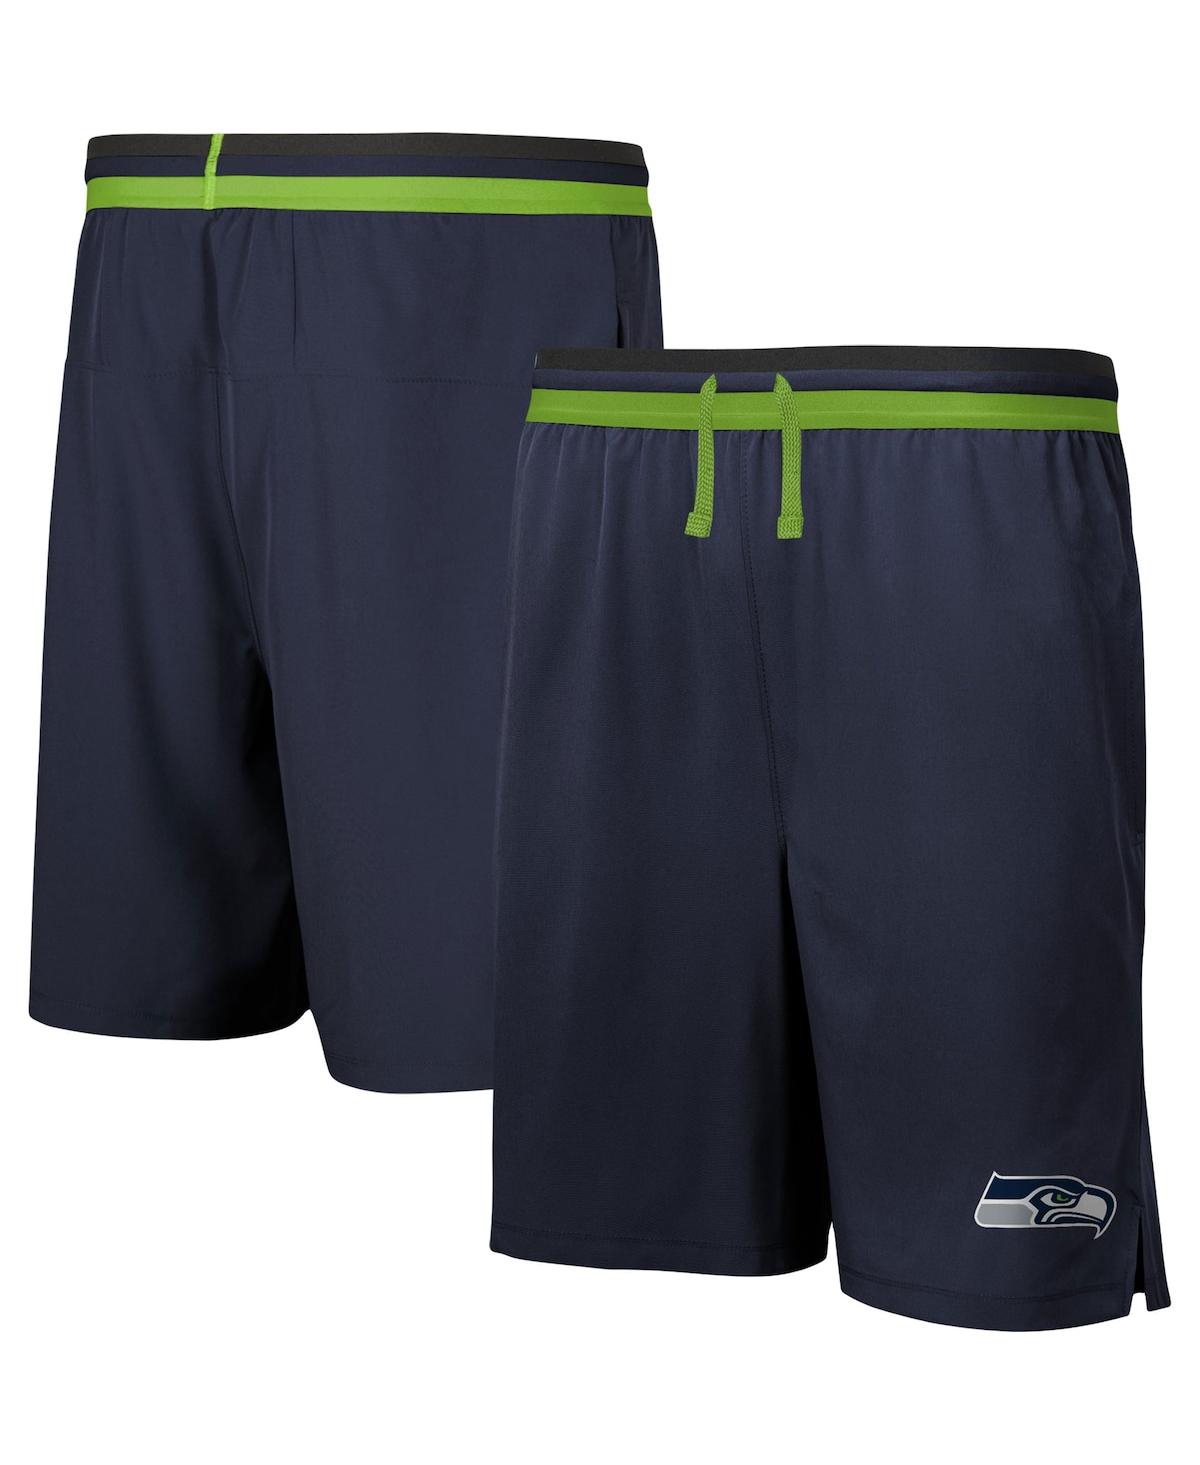 Shop Outerstuff Men's Navy Seattle Seahawks Cool Down Tri-color Elastic Training Shorts